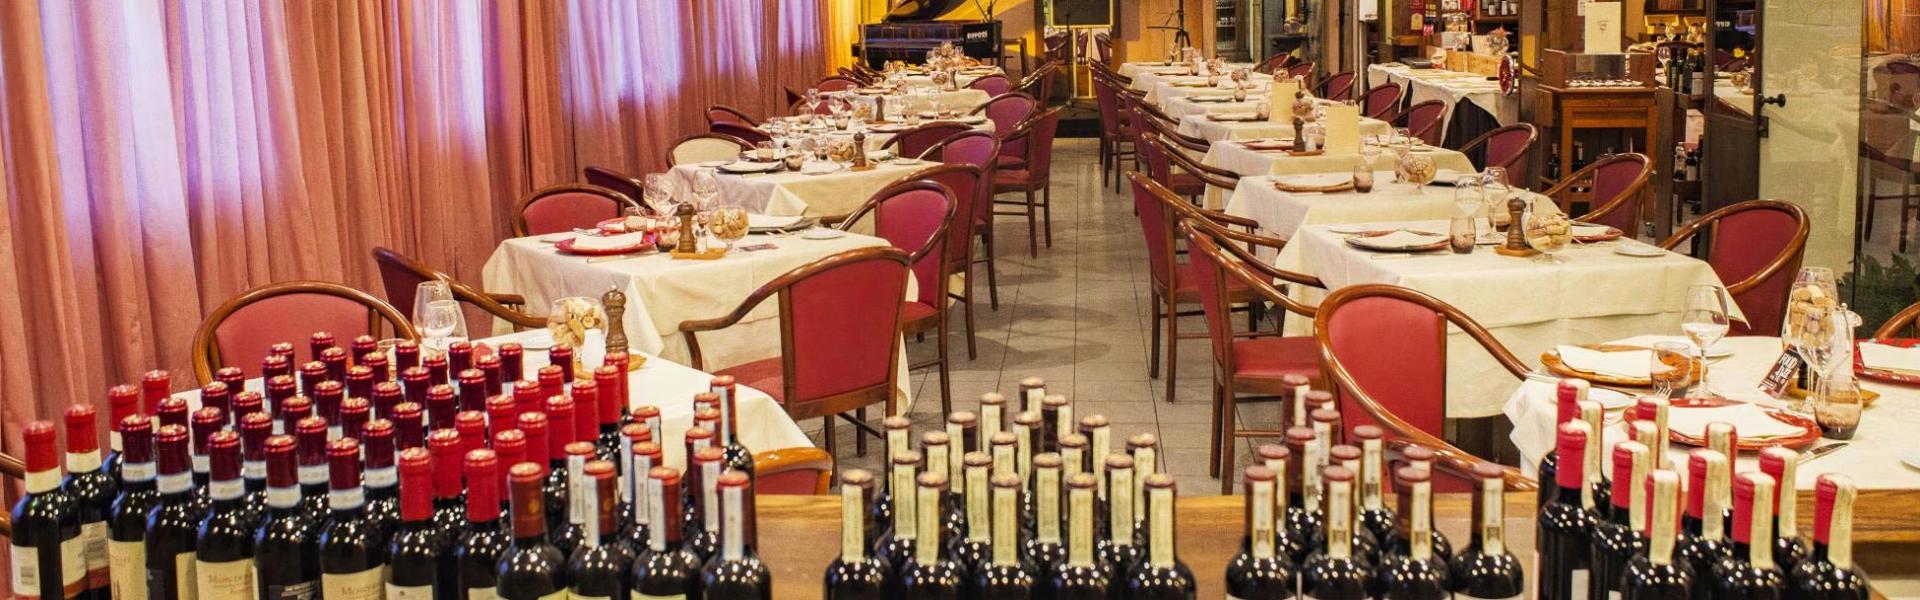 hotelgio en restaurant-menu 011